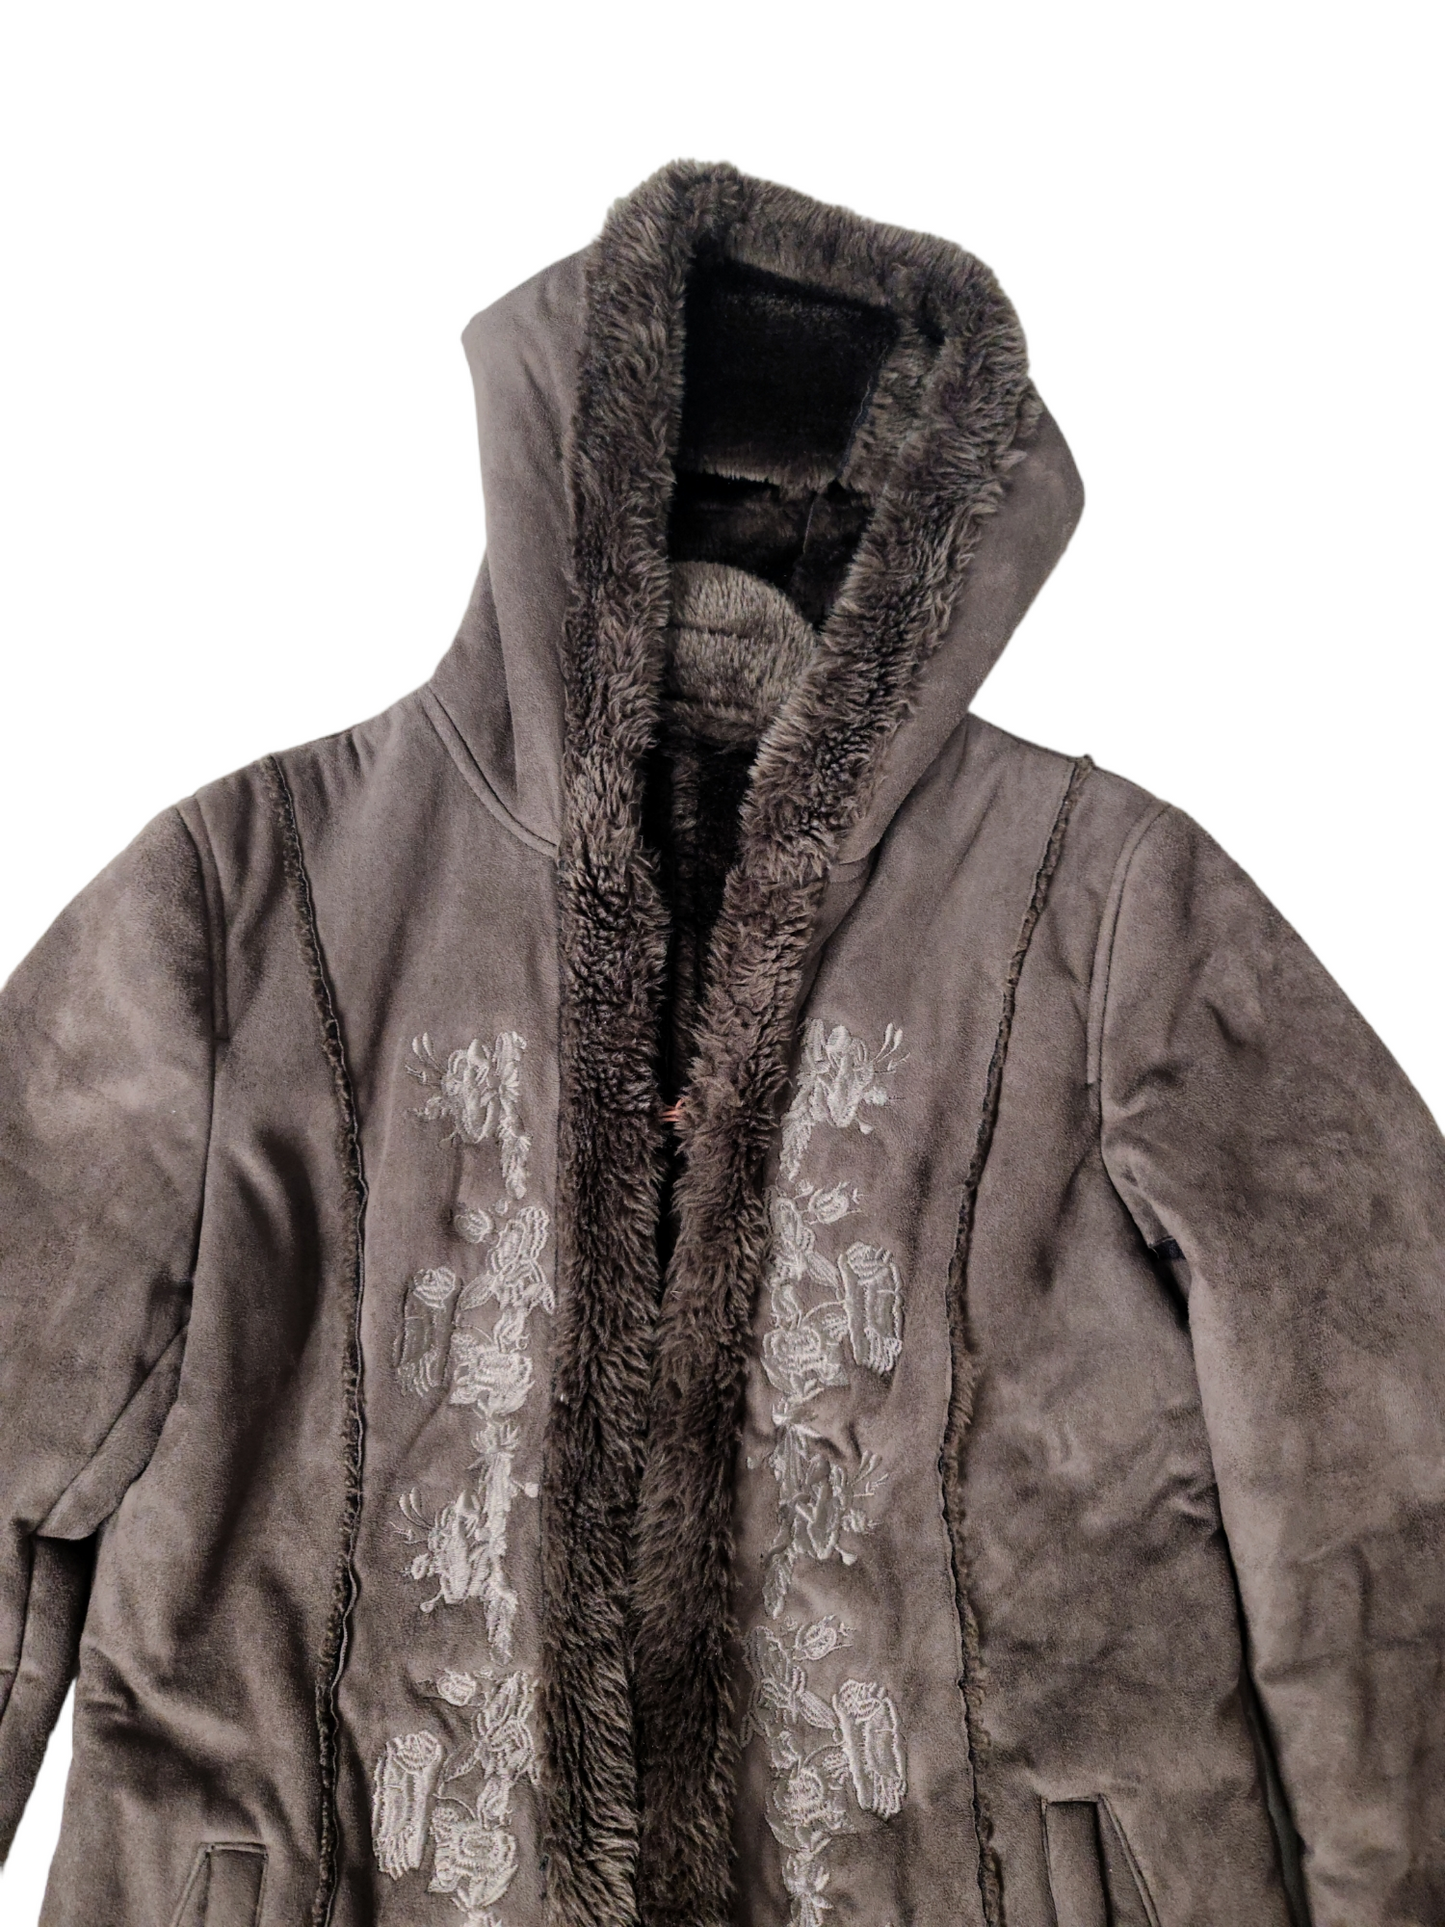 Long manteau afghan fairycore